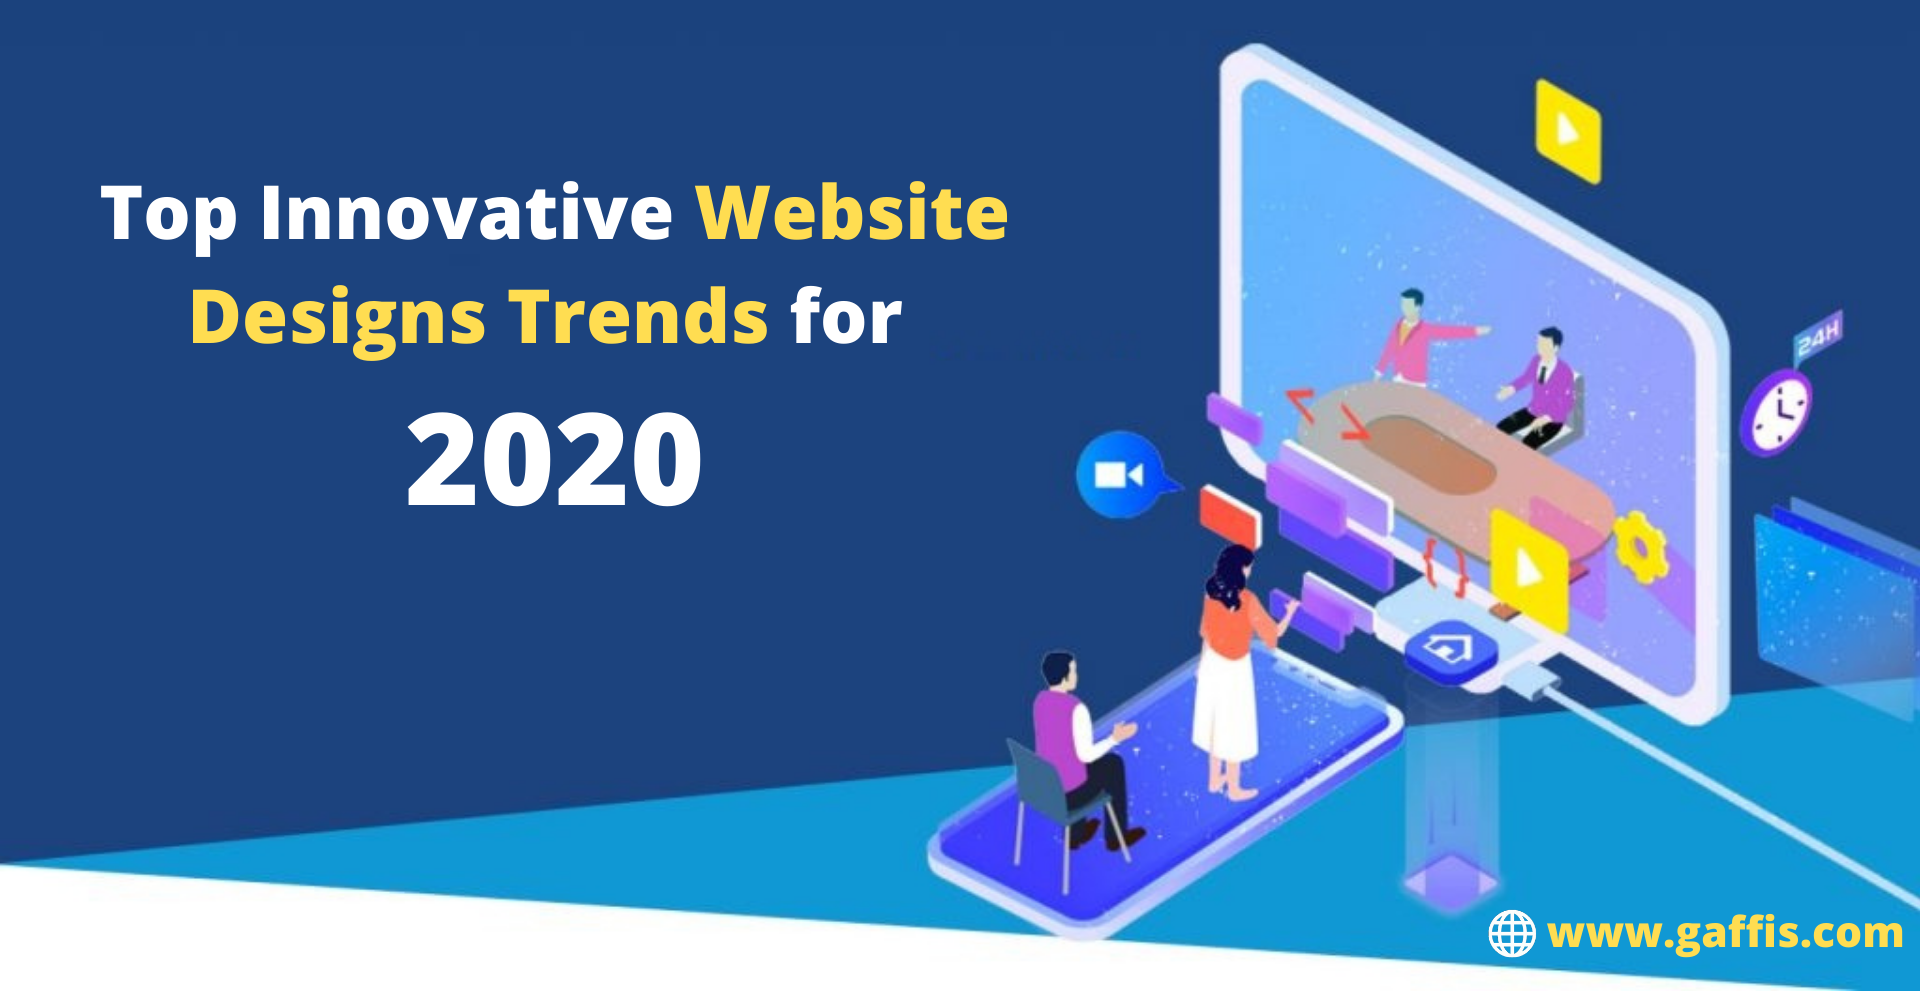 Top Innovative Website Designs Trends for 2020